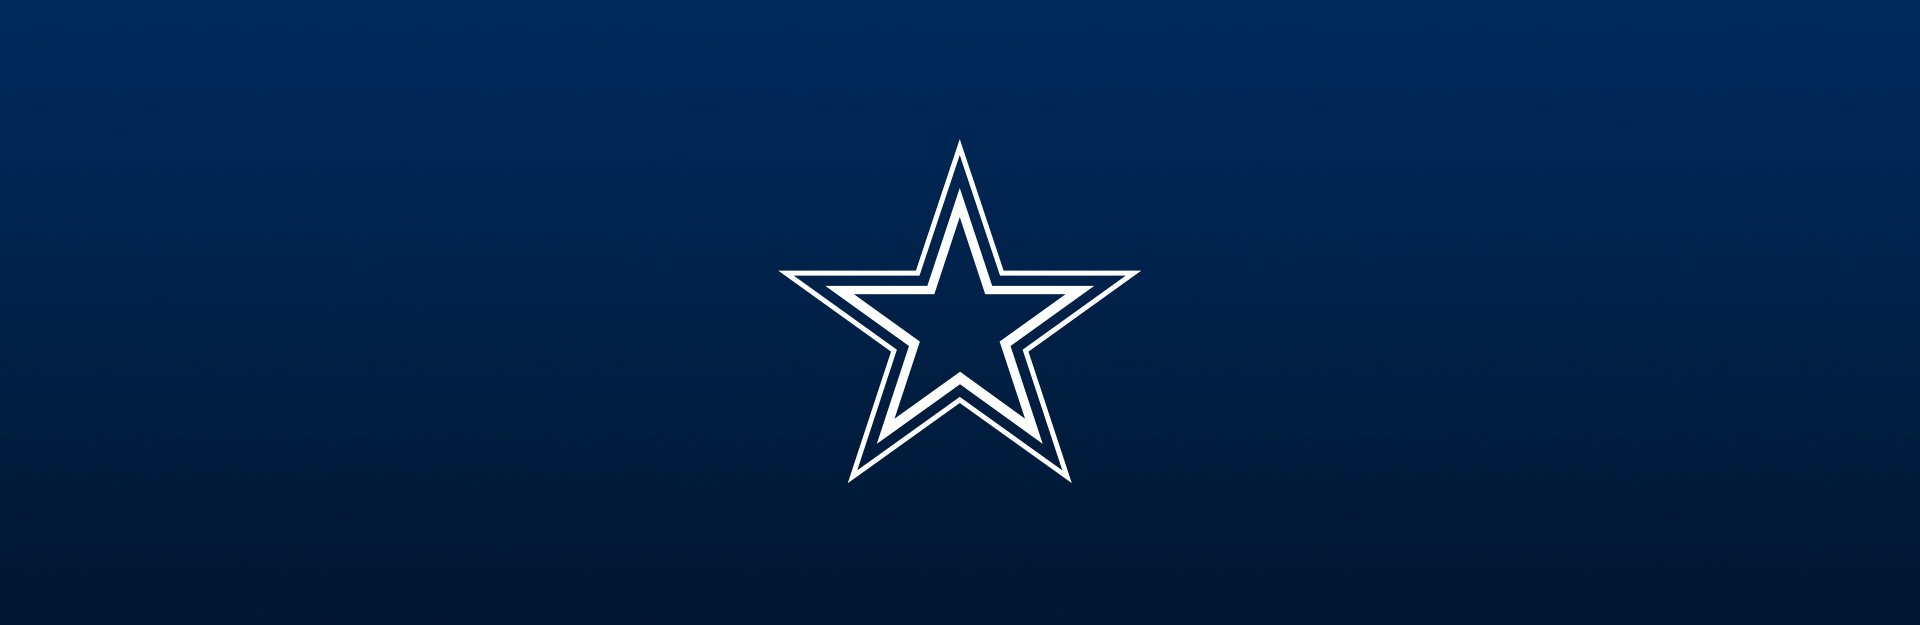 Dallas Cowboys logo on navy blue background